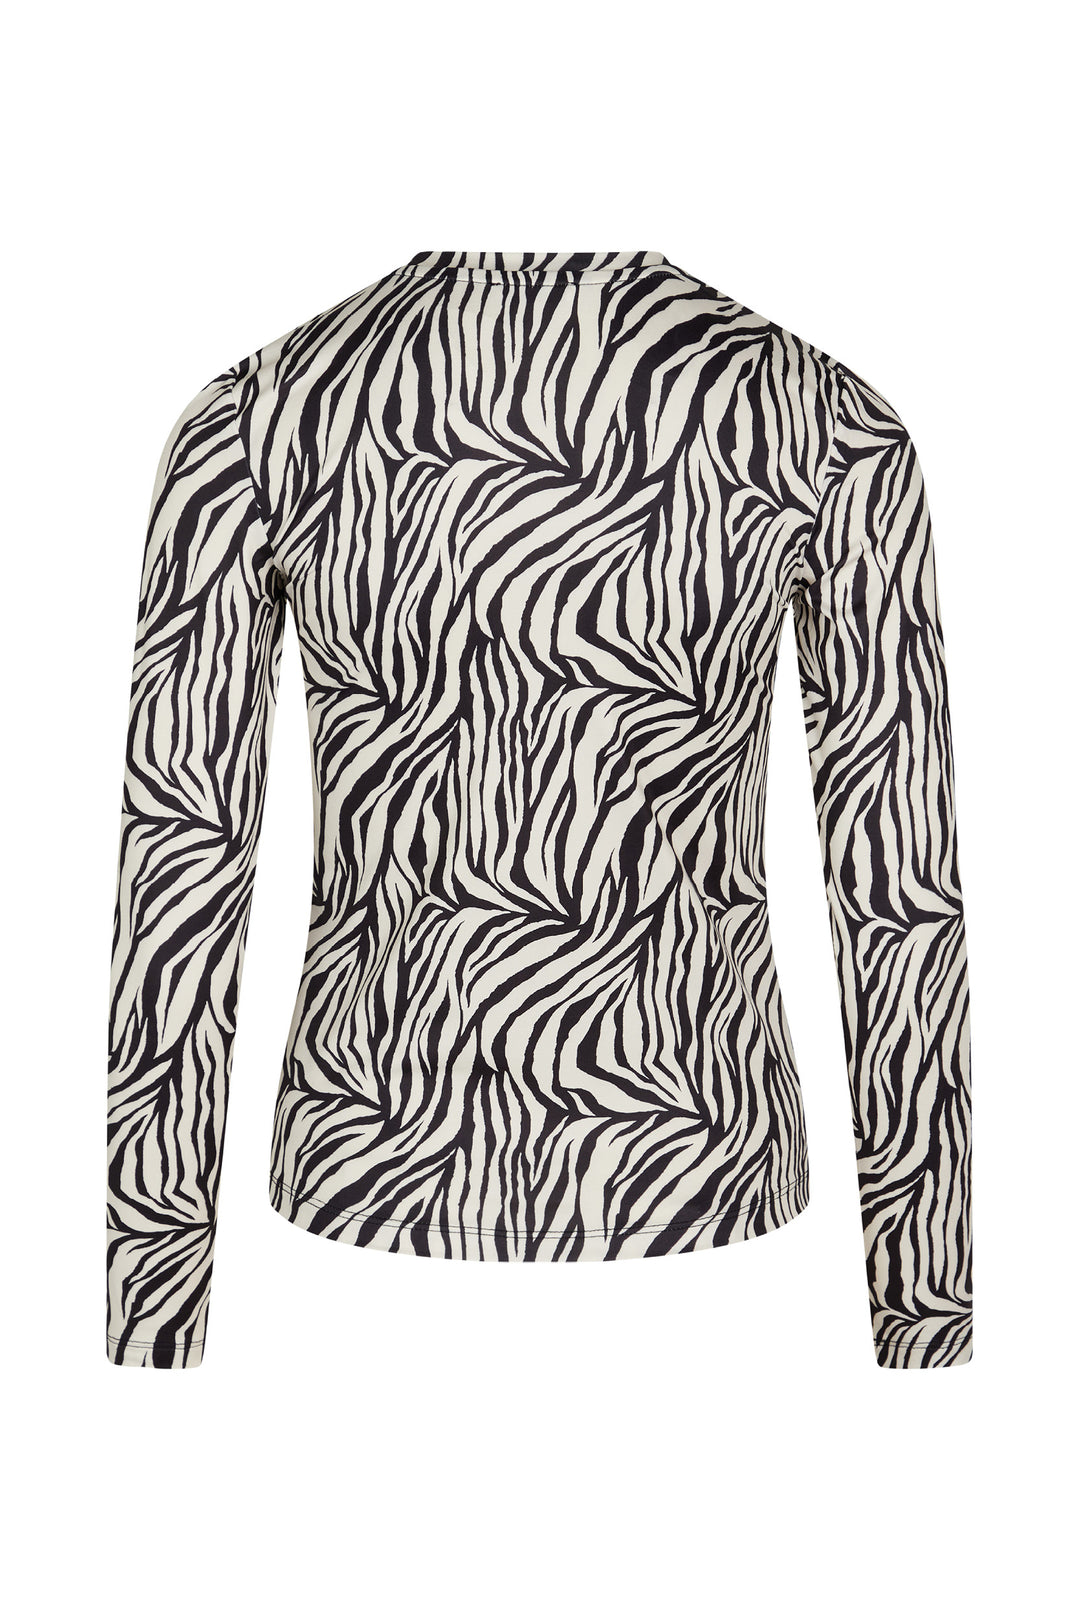 BZR ReginaBZ Crew neck blouse blouse Zebra print